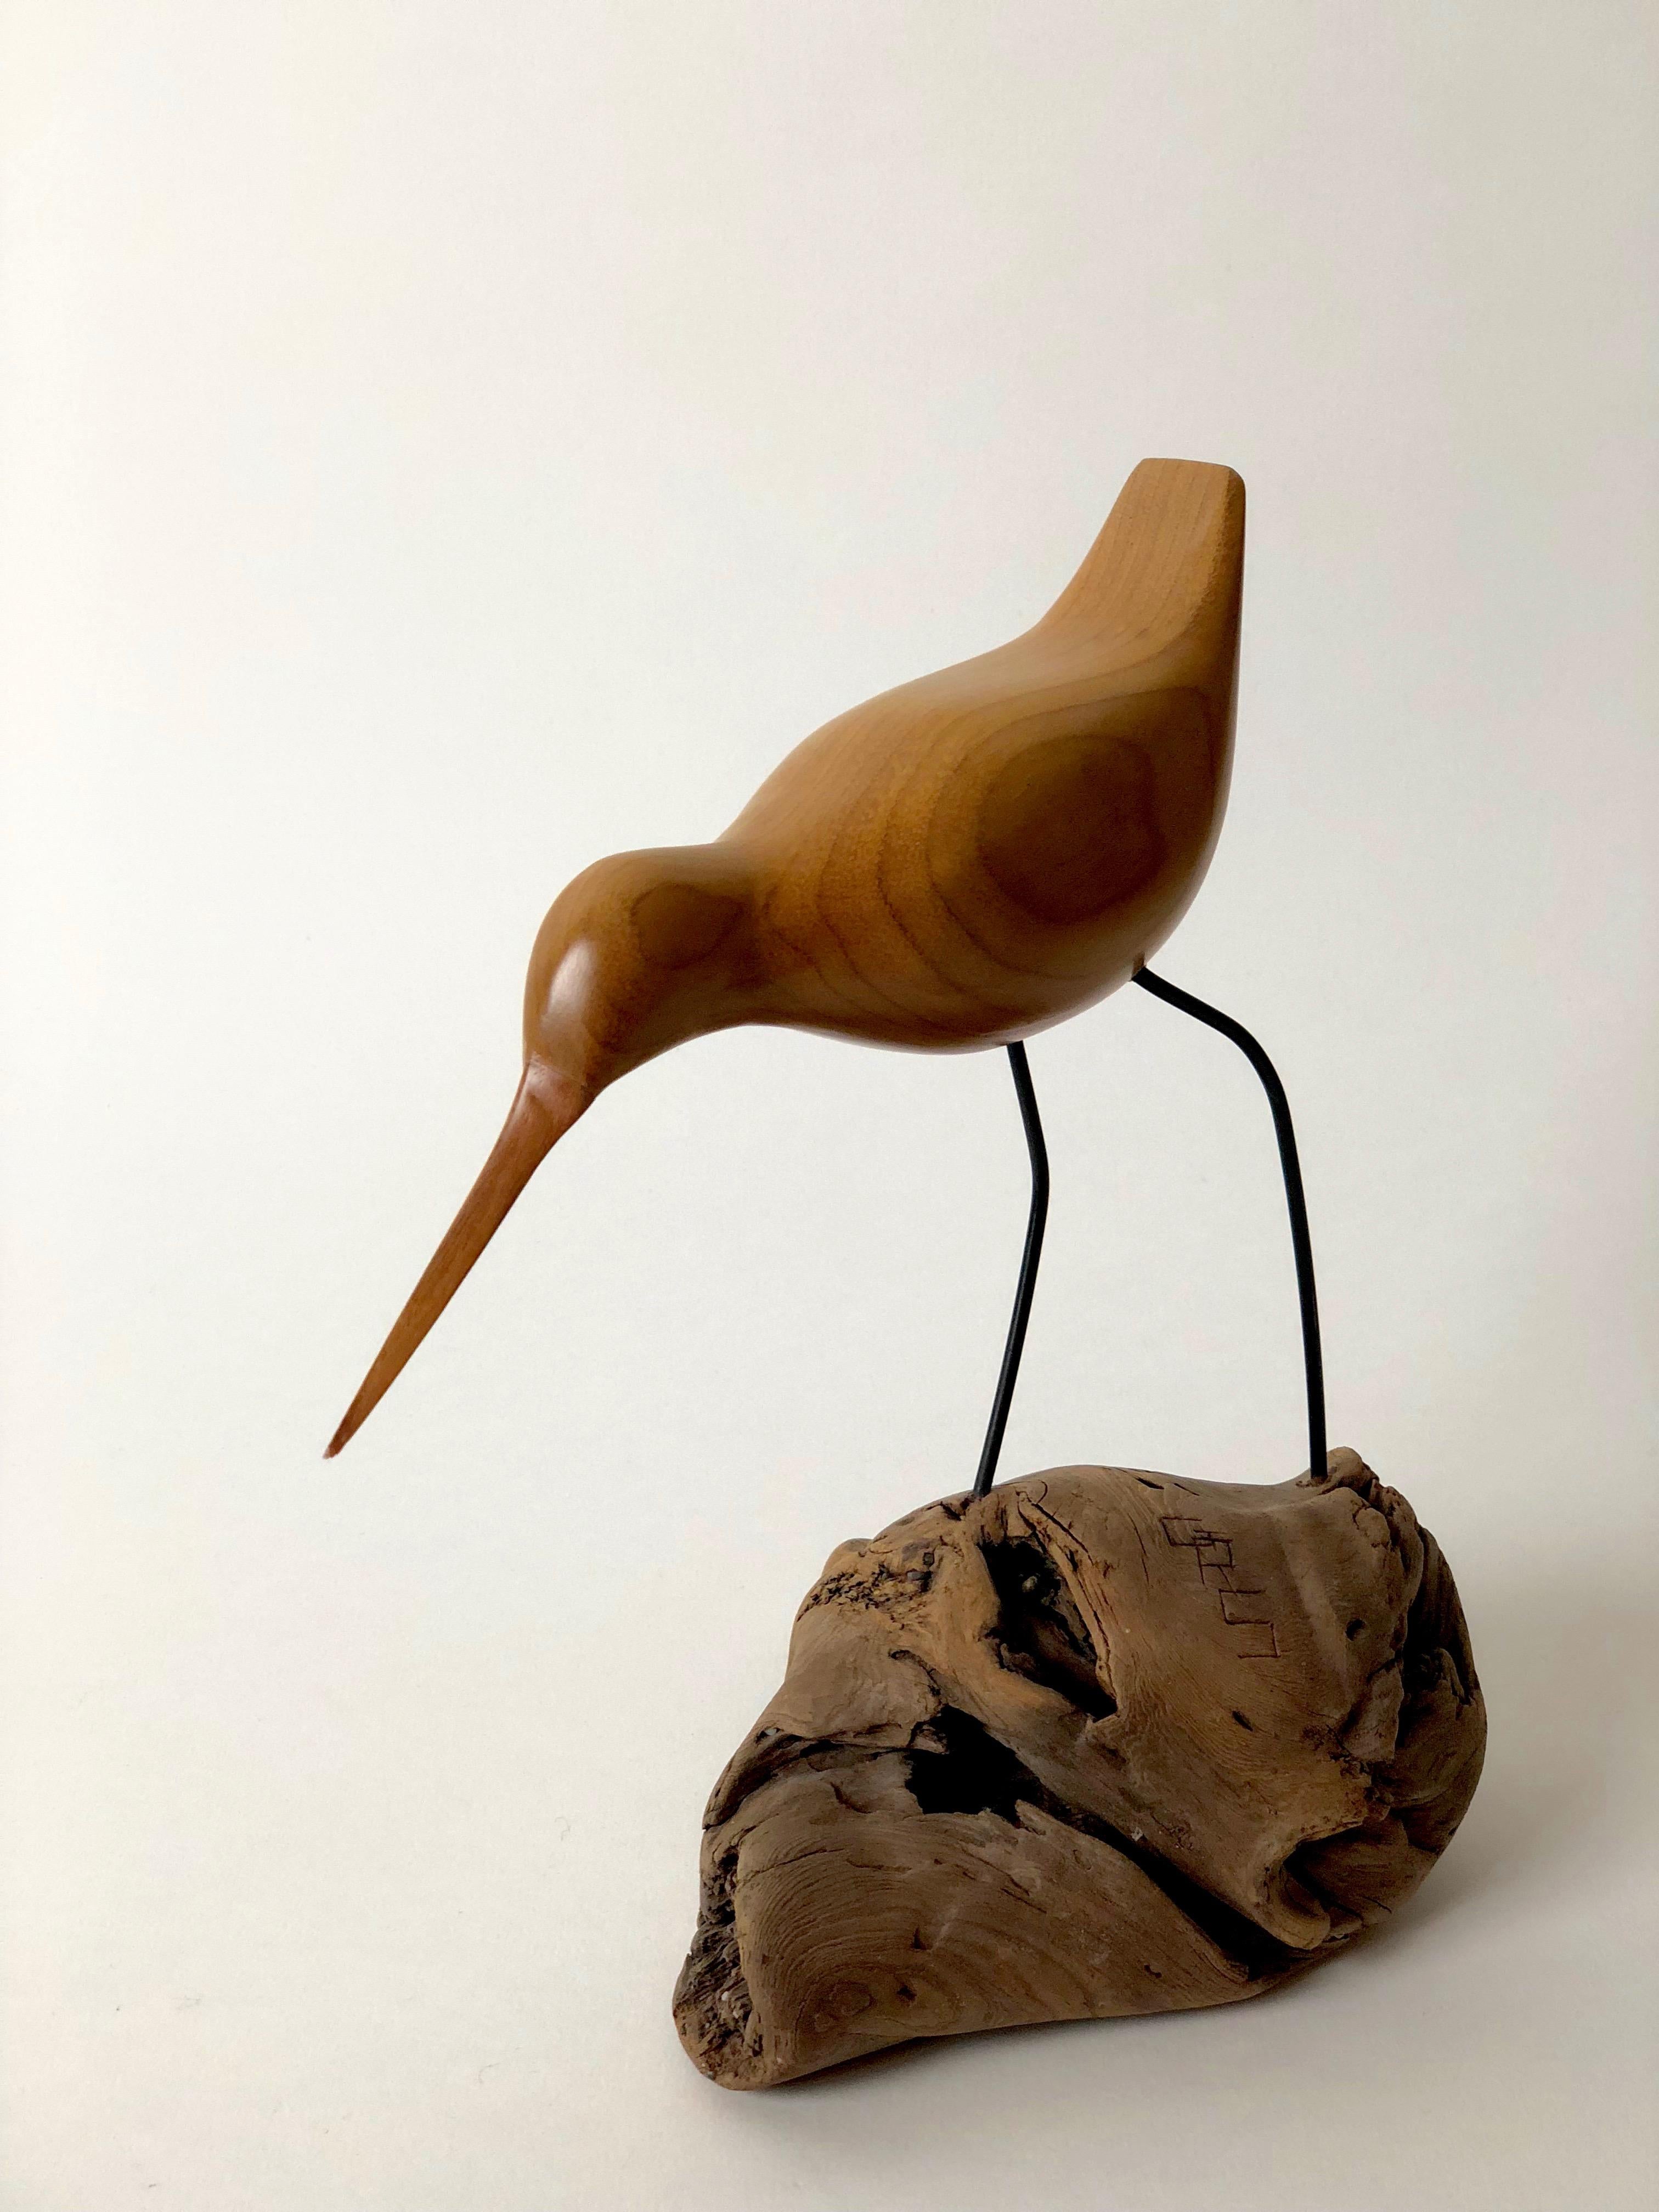 Austrian Midcentury Abstract Sculpture of a Bird, from Austria